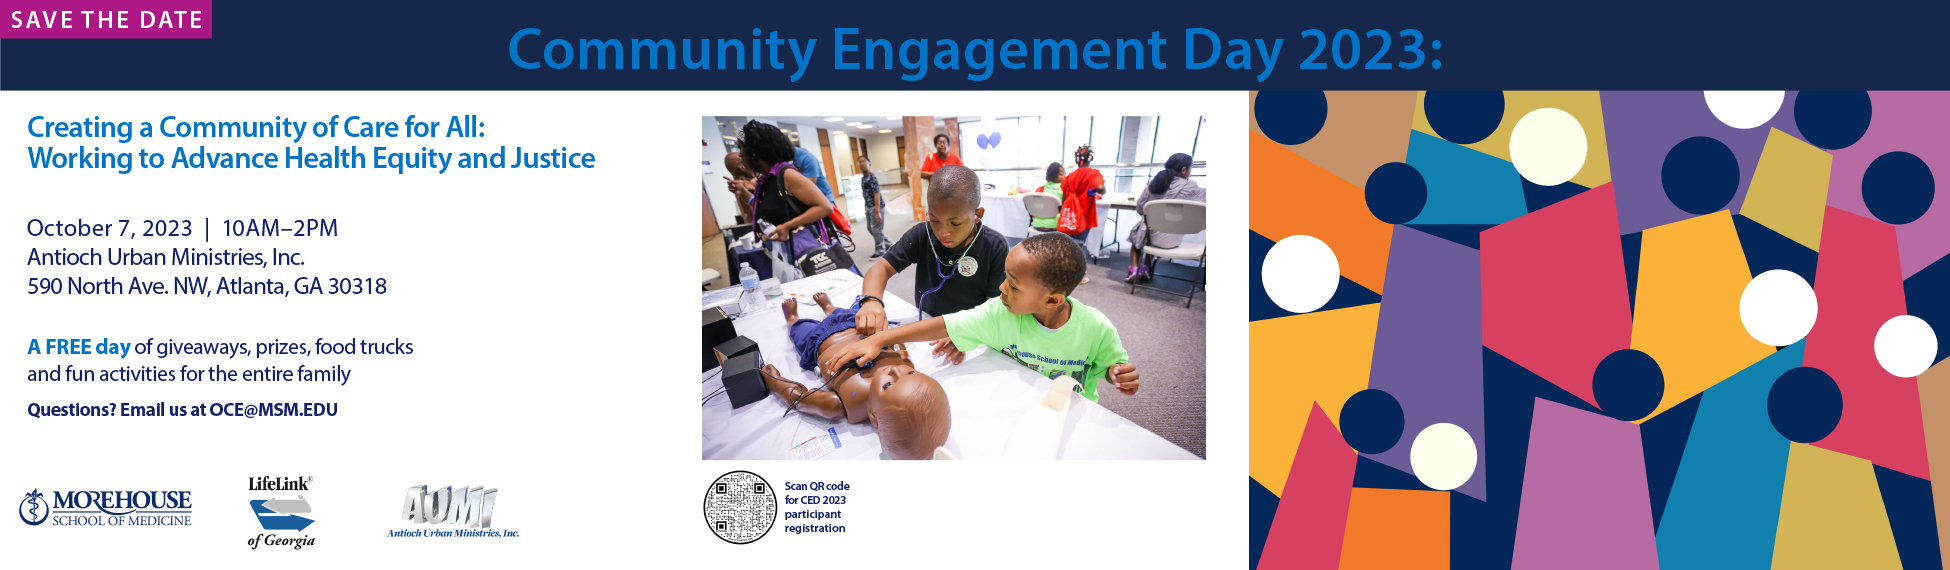 Community Engagement Day